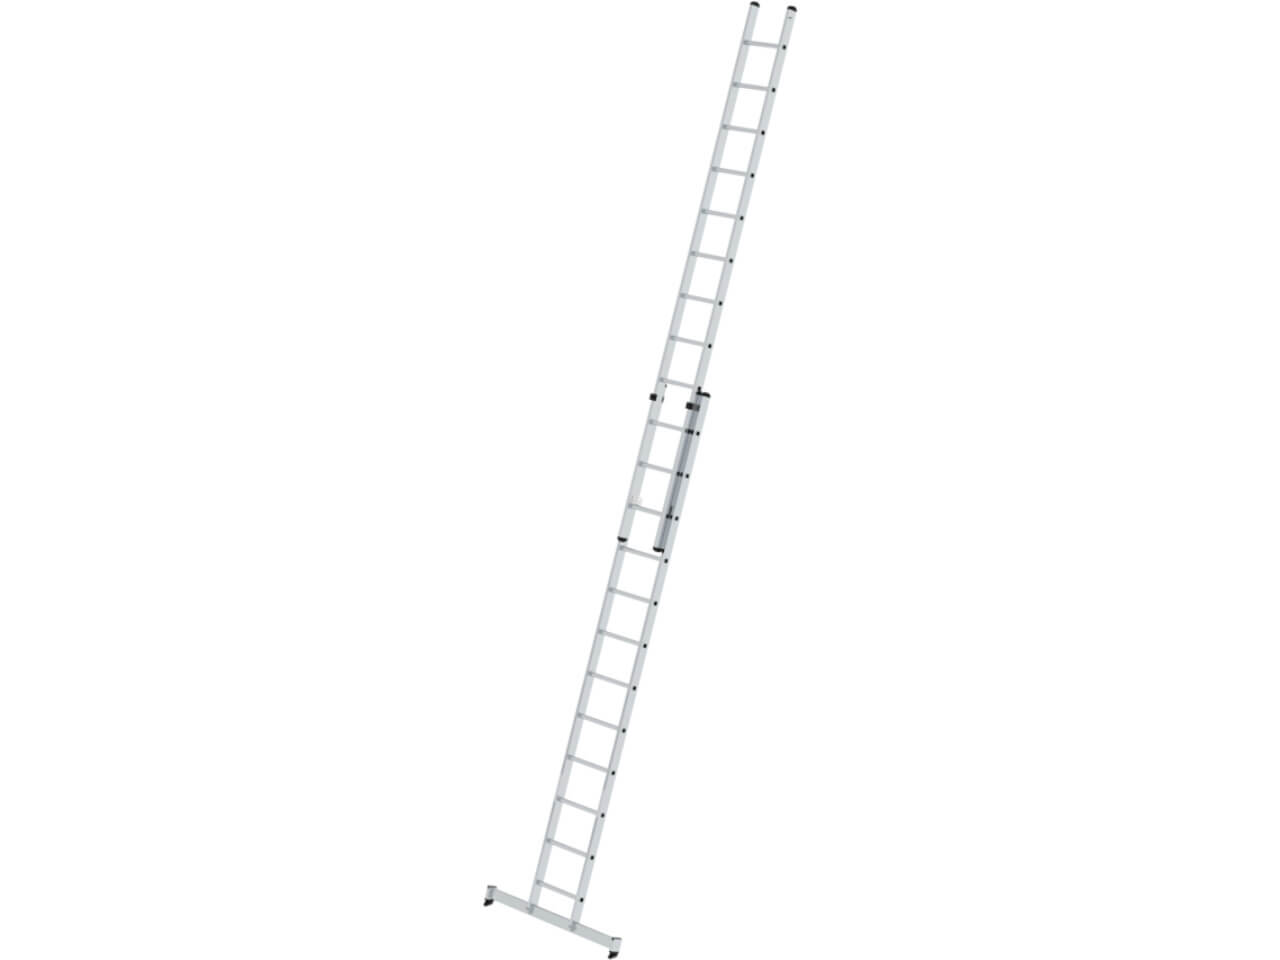 munk alu schiebeleiter (20412) 6 meter lang mit sprossen